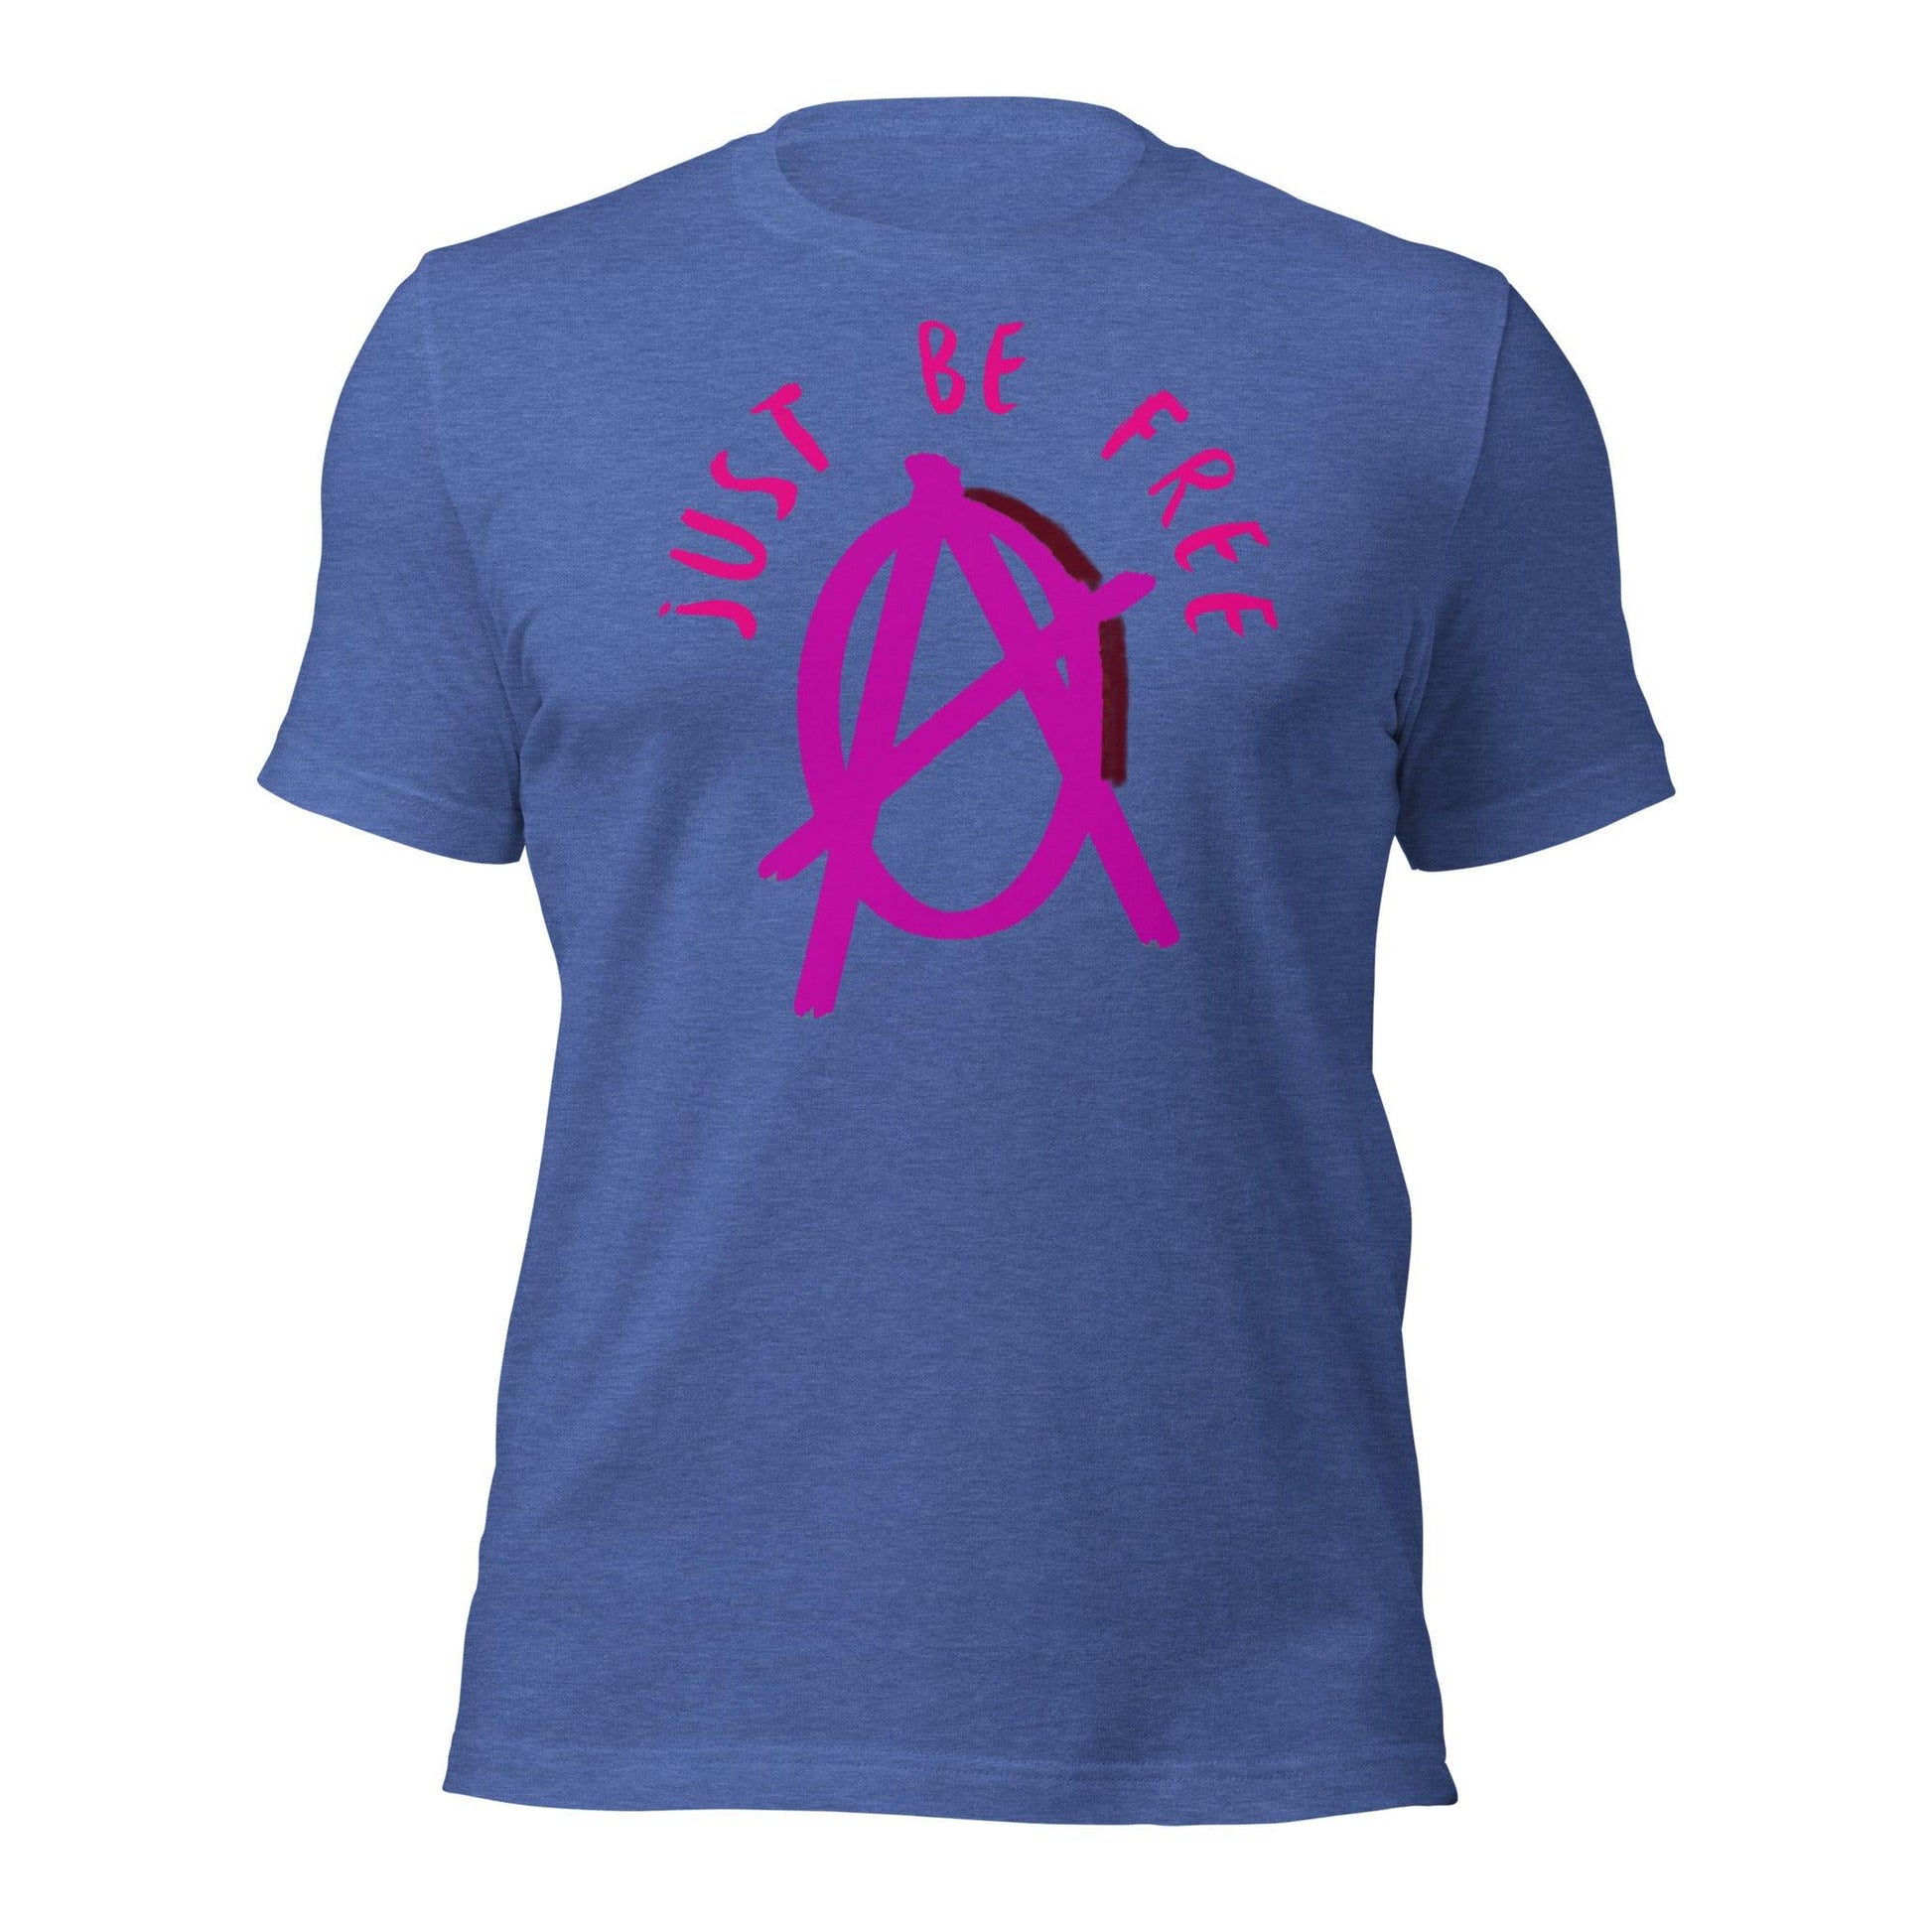 Anarchy Wear "Just Be Free" Pink Unisex t-shirt - AnarchyWear